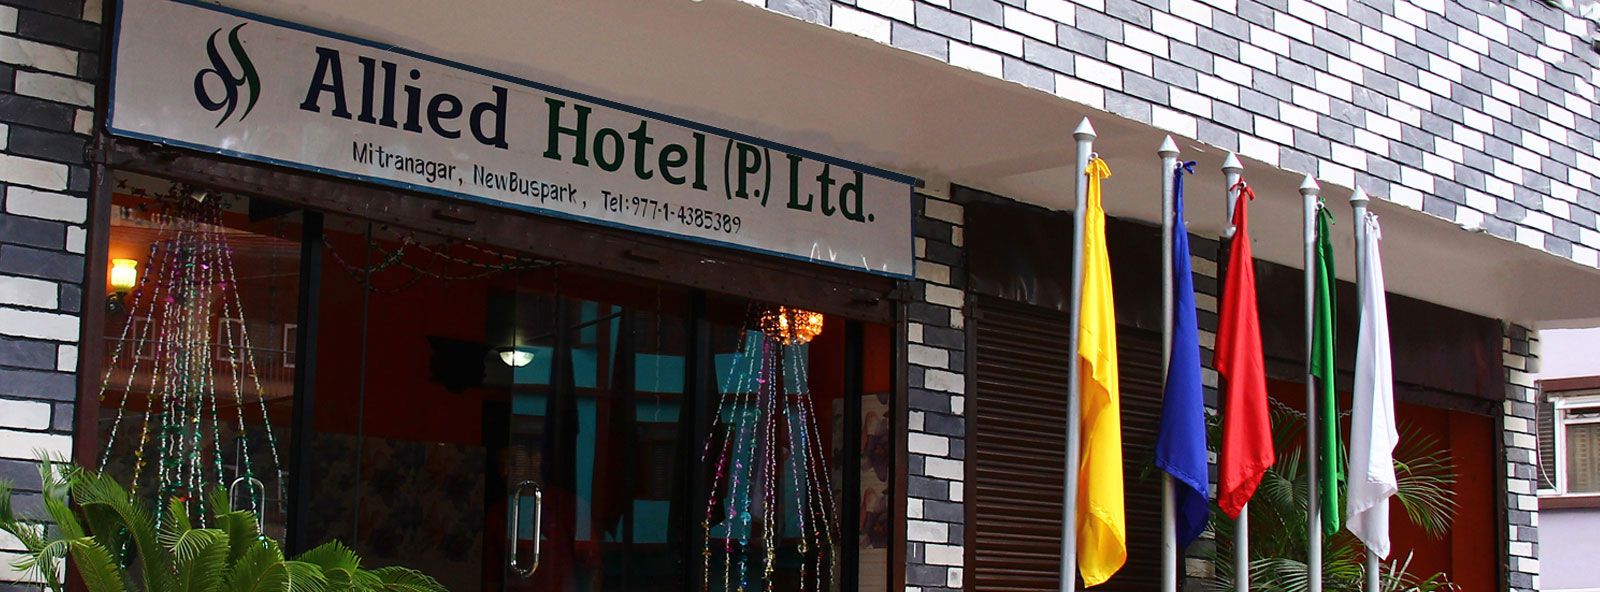 Best Toursit Standard Hotel in Buspark, Kathmandu